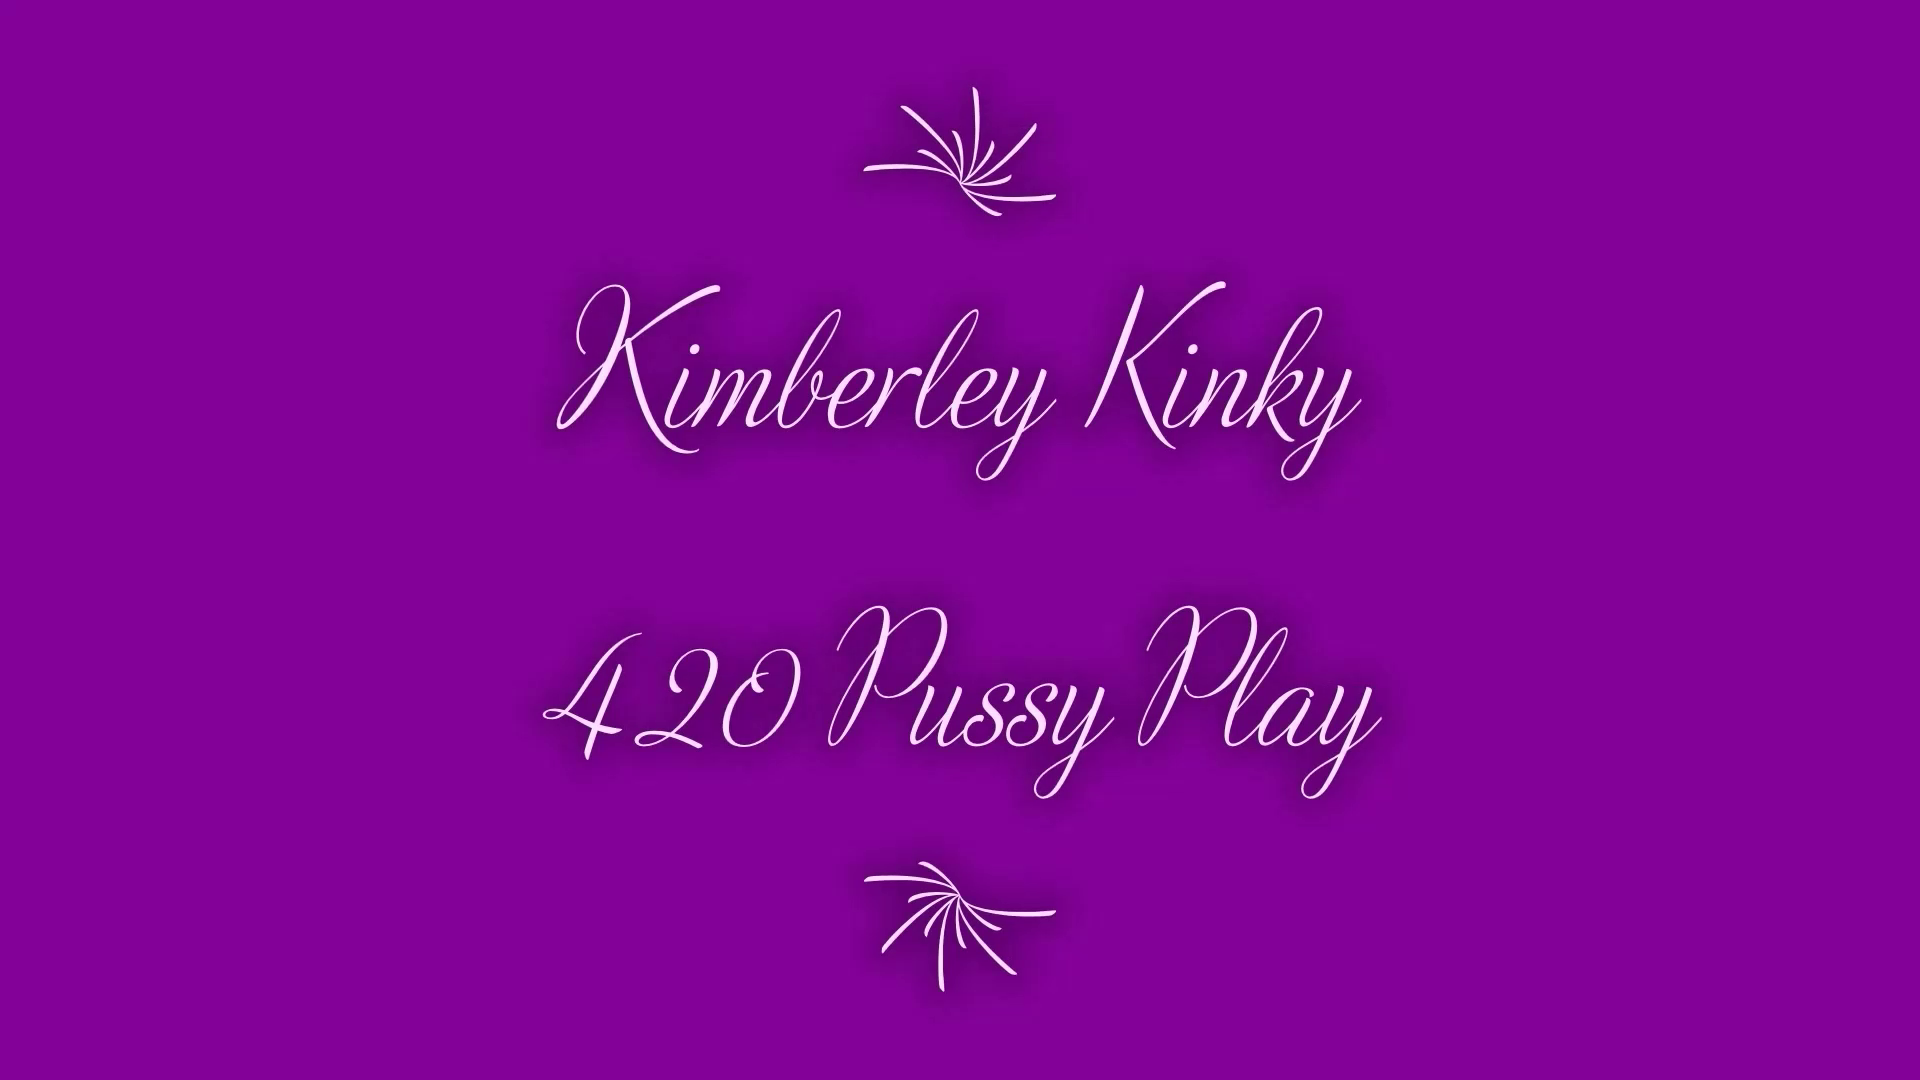 Video post by kimberley kinky